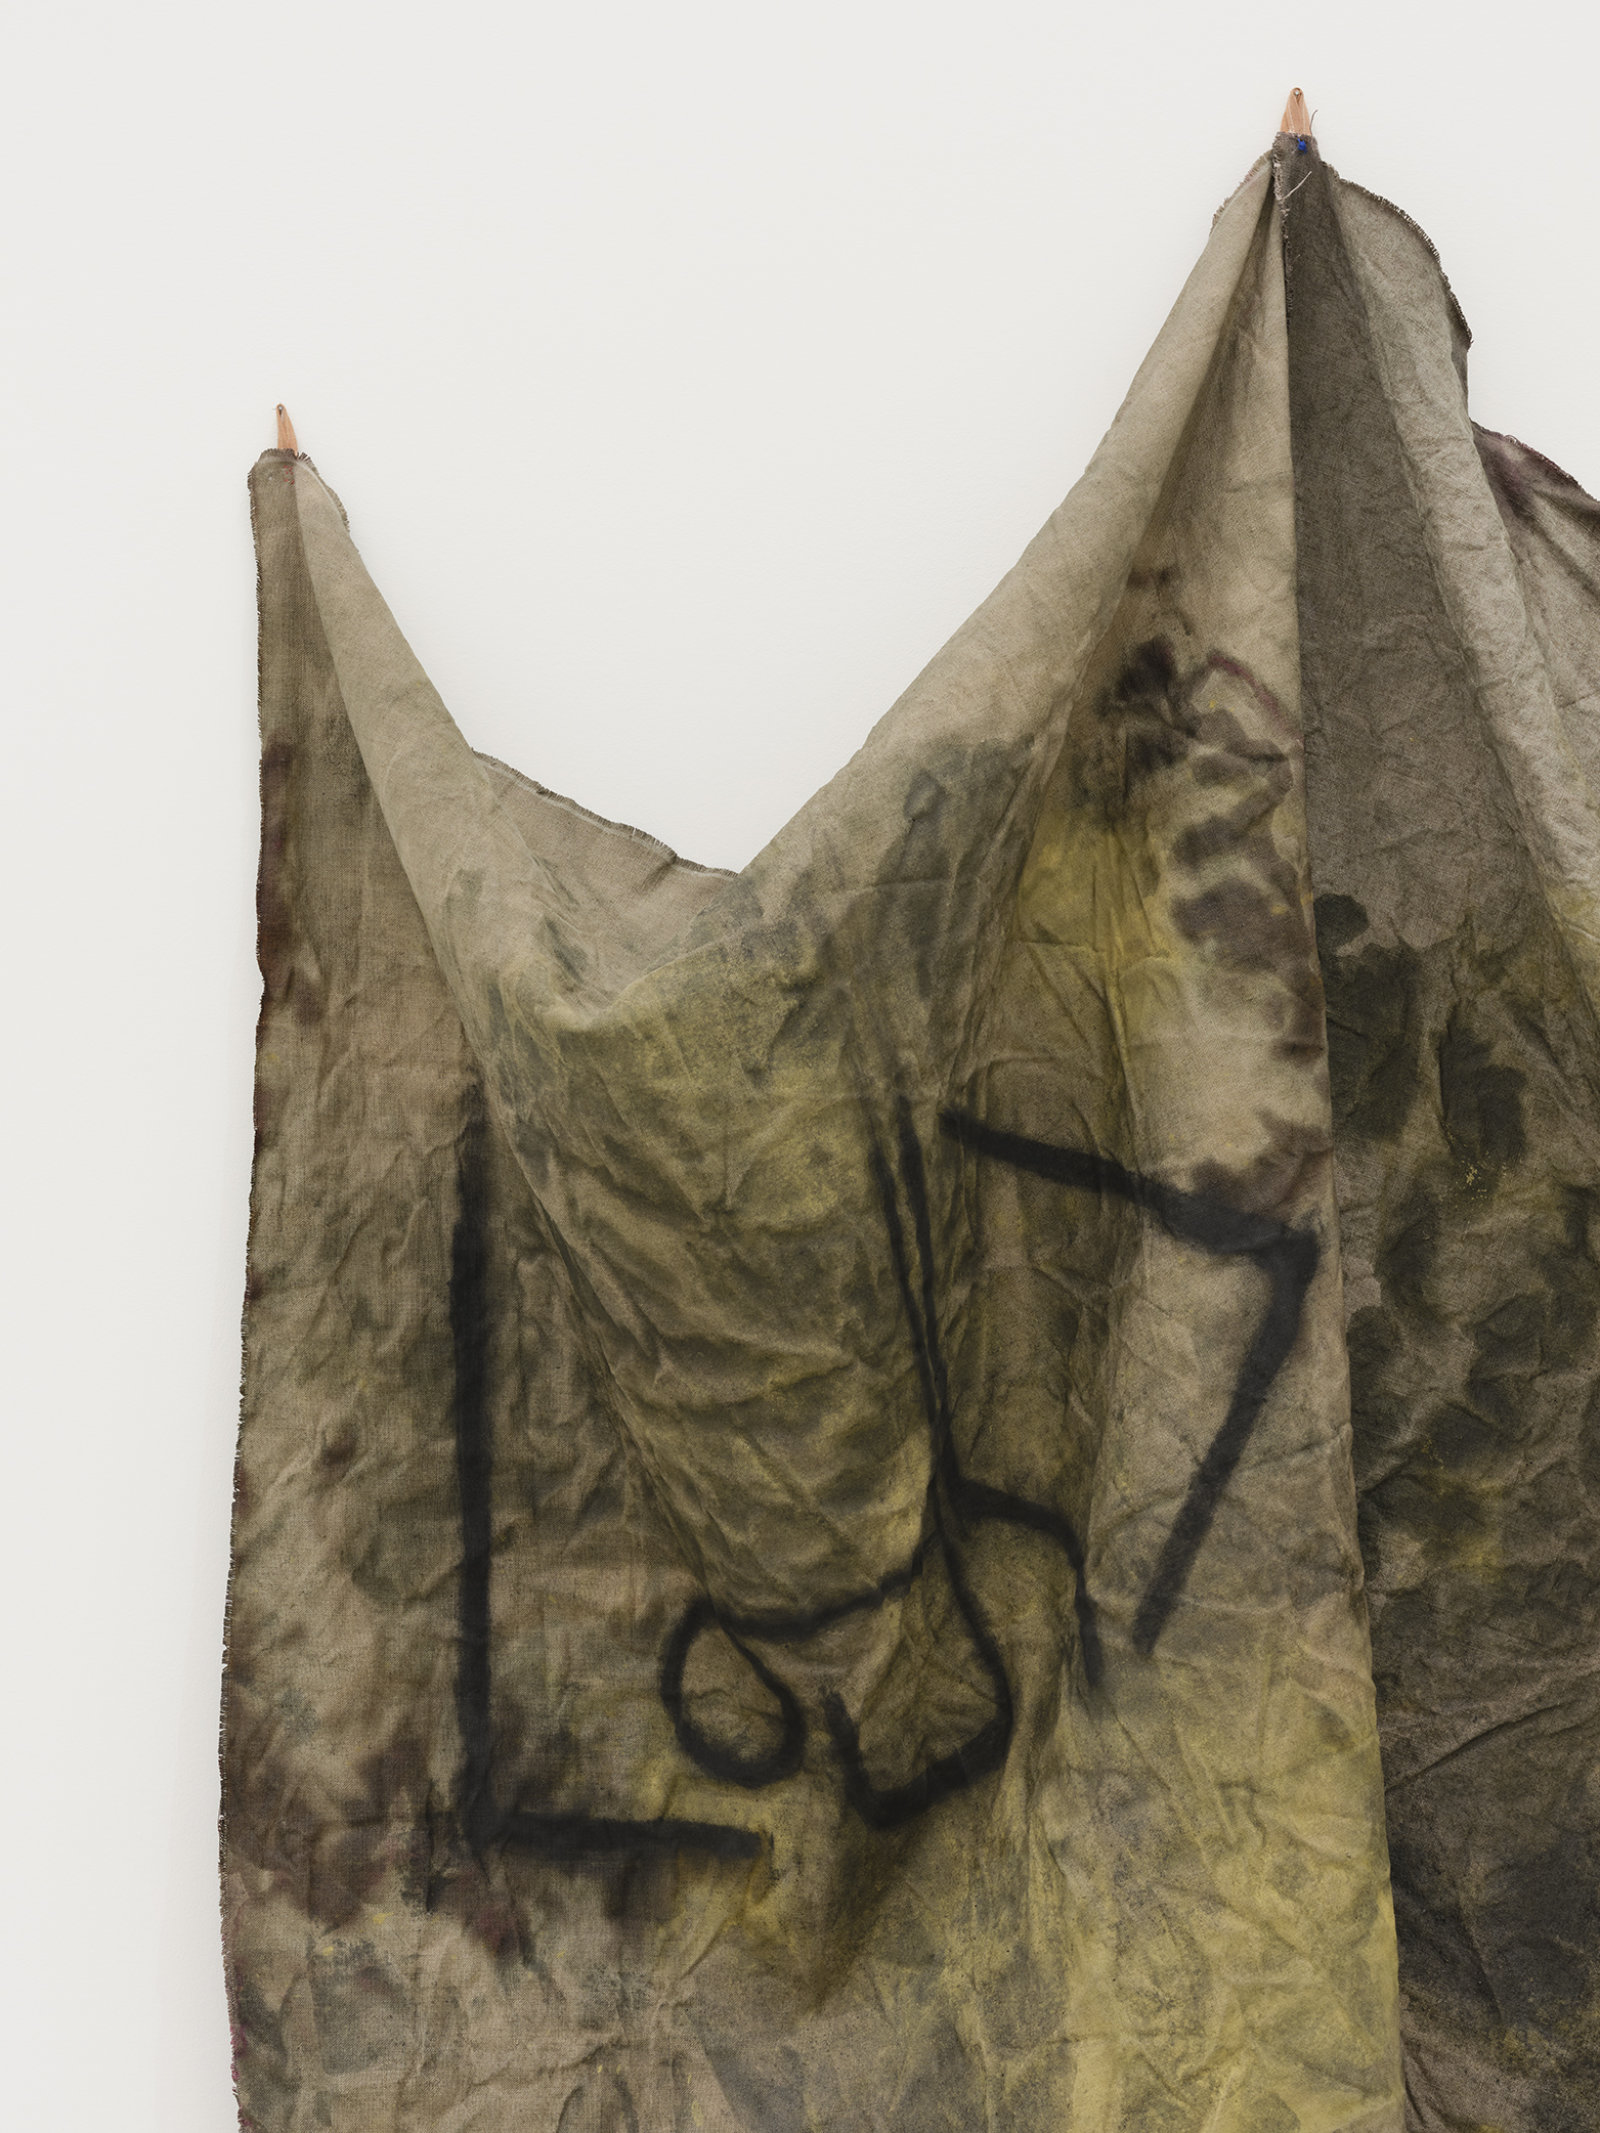 Duane Linklater, bugjuice (detail), 2021, digital print on linen, cochineal dye, yellow ochre, honey, charcoal, nails, 66 x 45 x 9 in. (168 x 114 x 22 cm)